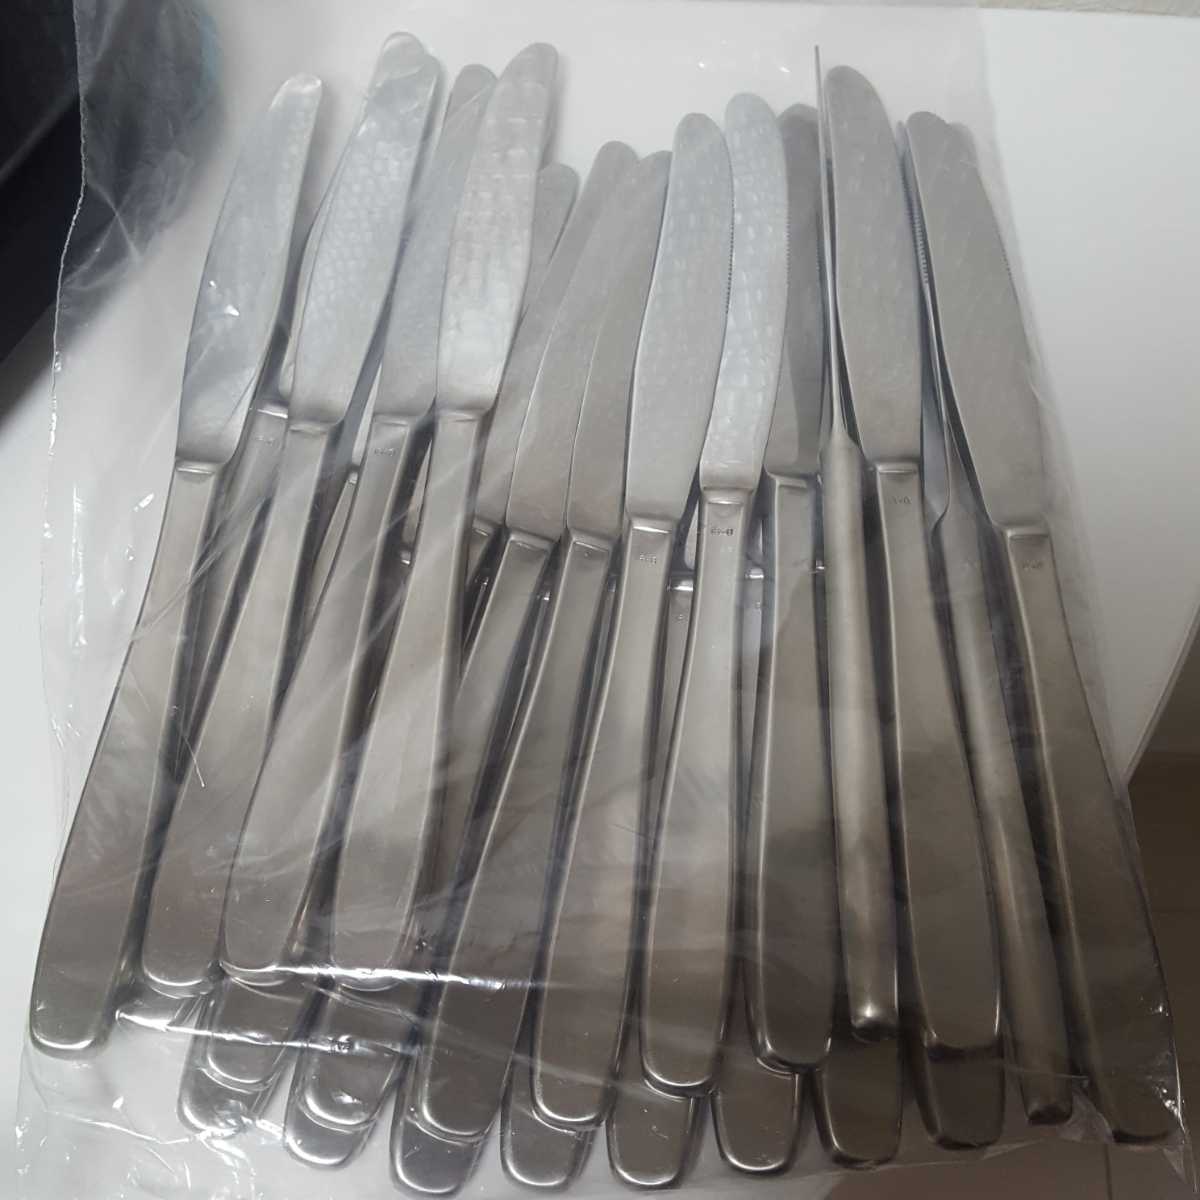  нож 43 шт. комплект SilverArrow STAINLESS 18-8 еда и напитки магазин продажа комплектом ножи 